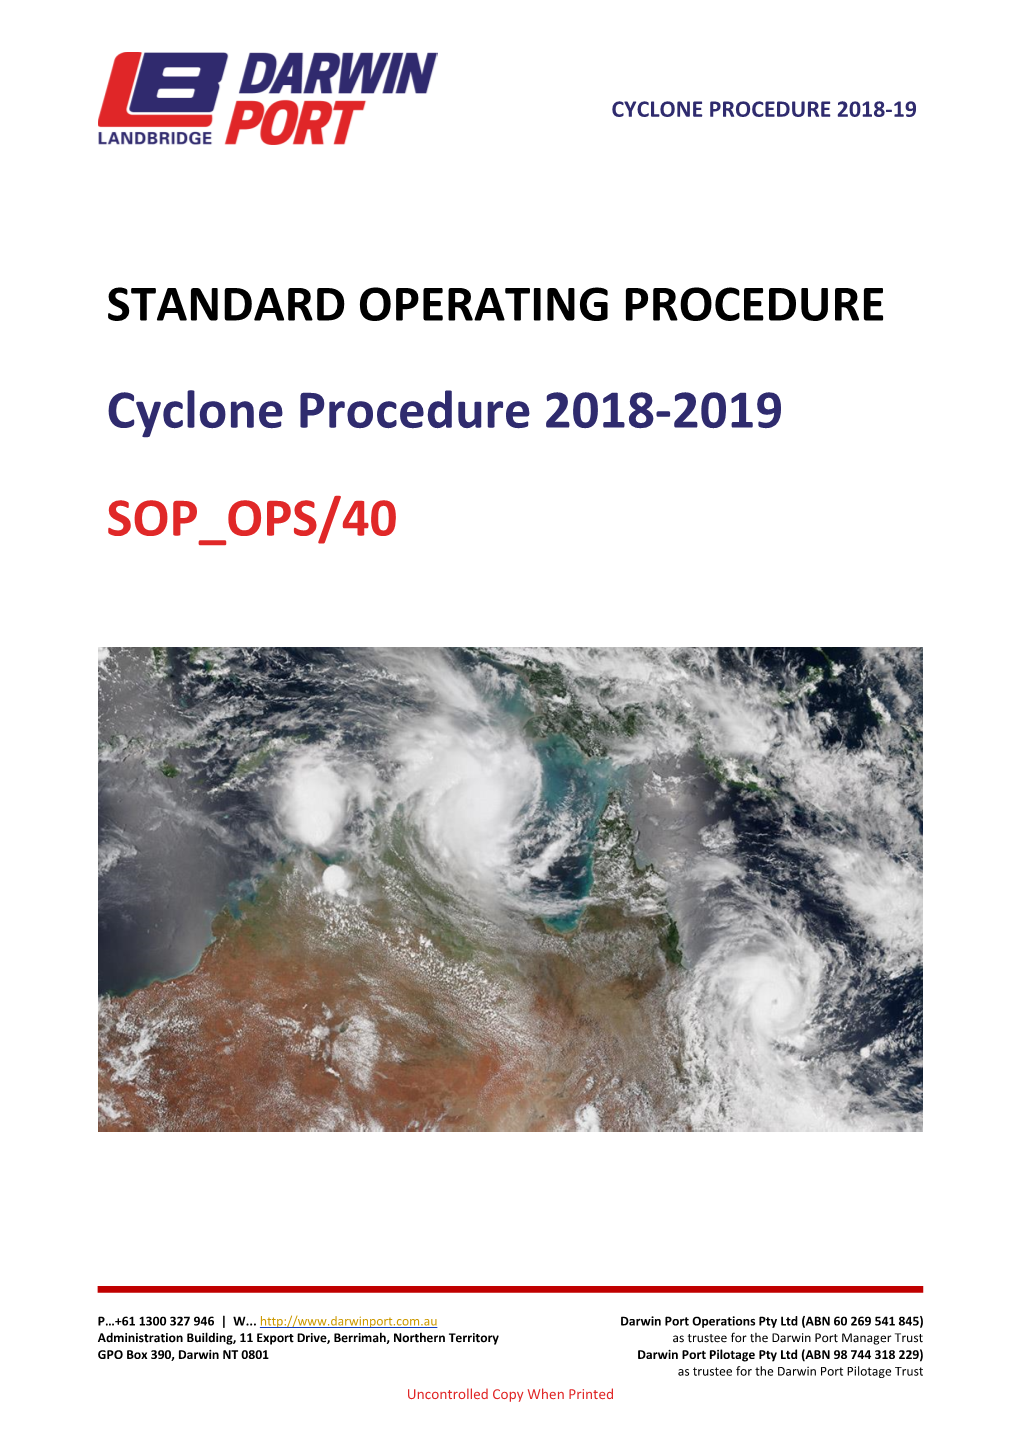 Cyclone Procedure 2018-19